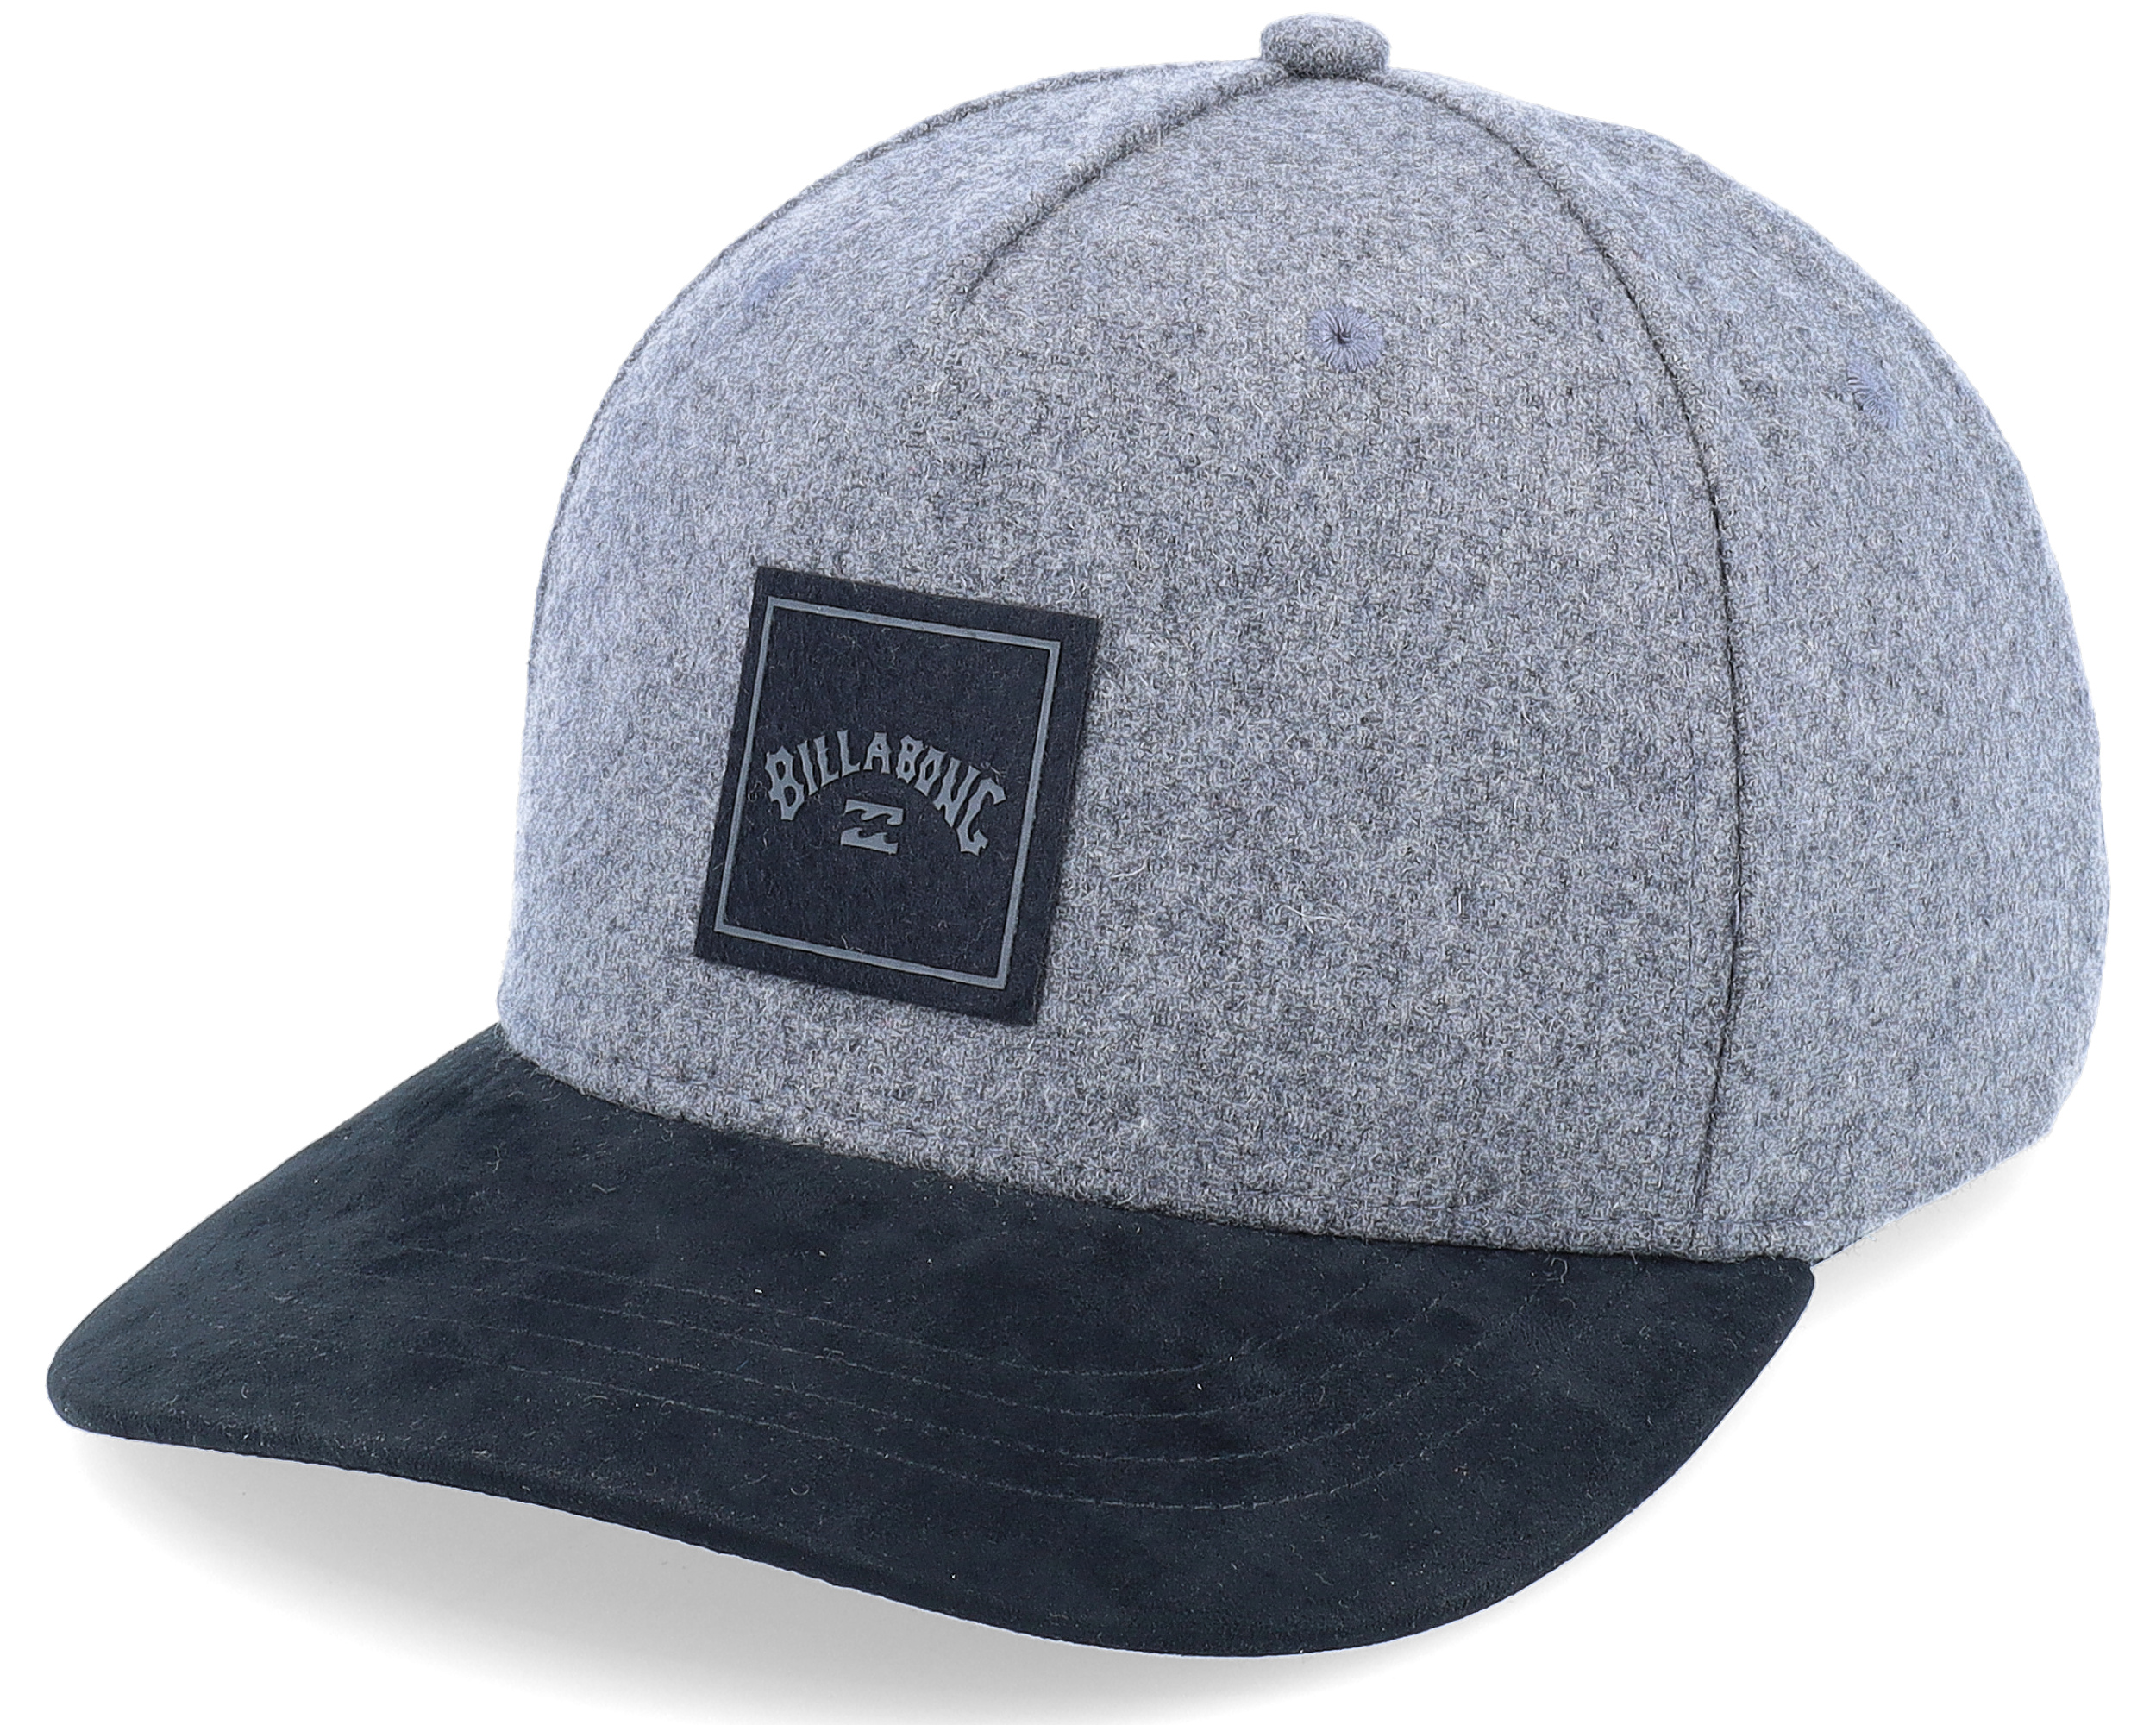 Billabong Stacked Snapback Hat - Grey Heather